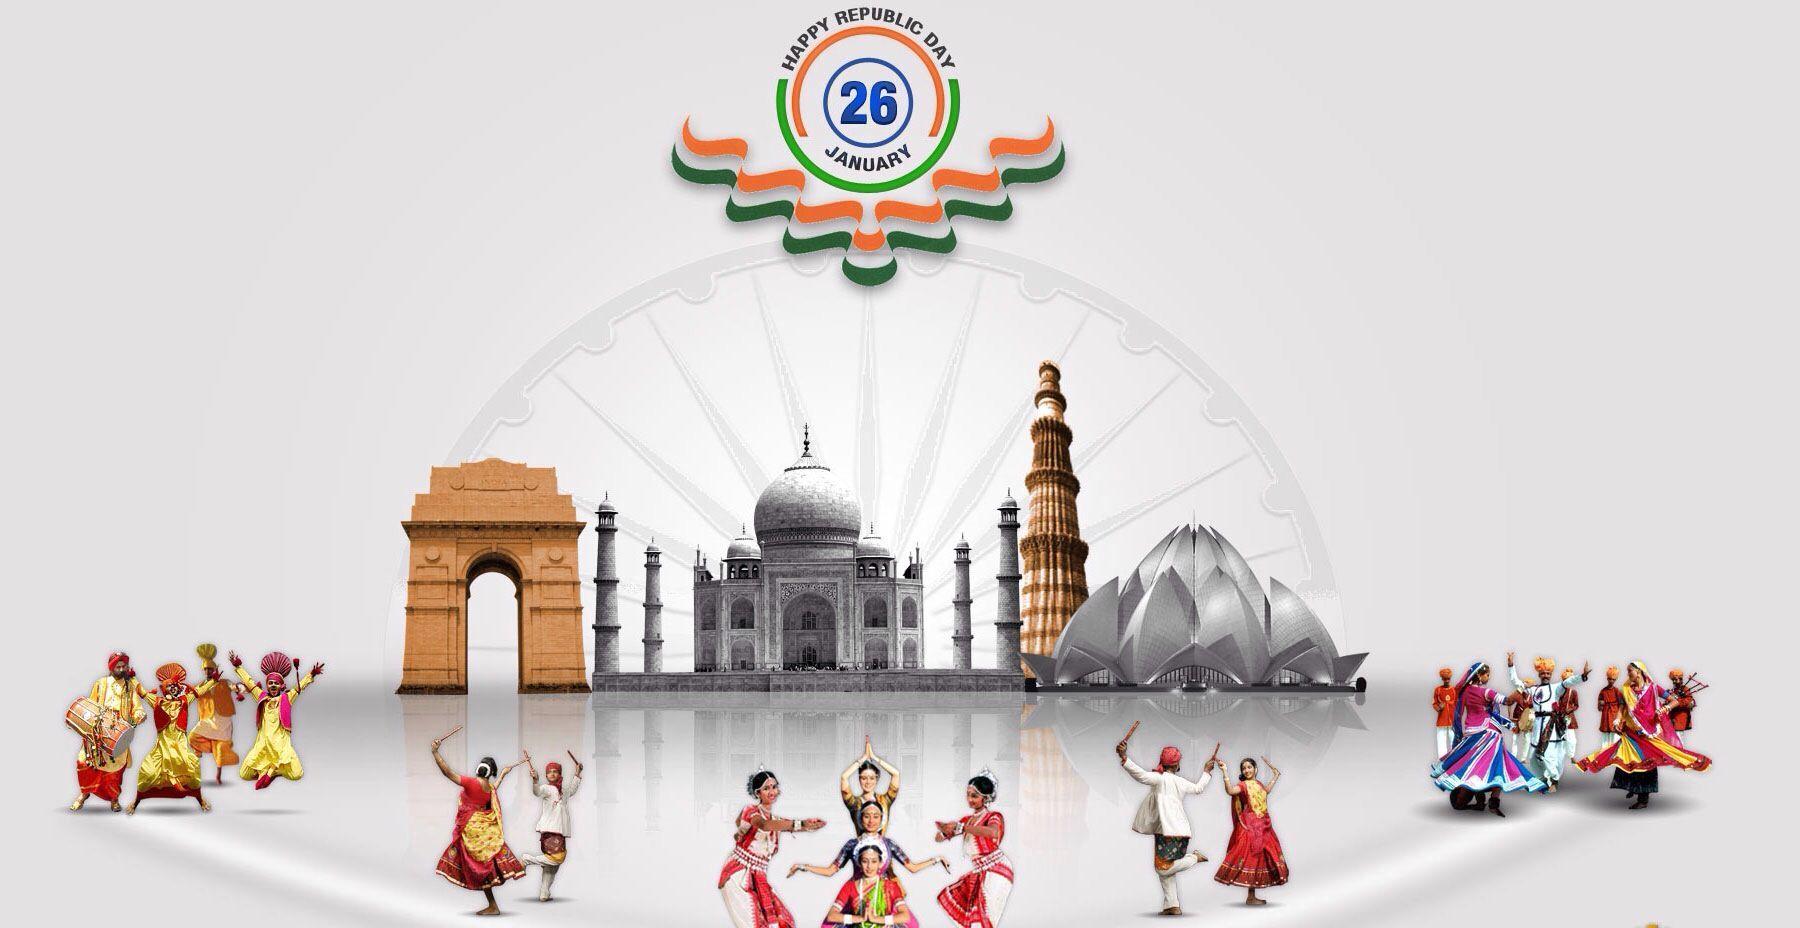 1664427 Indian Culture Images Stock Photos  Vectors  Shutterstock